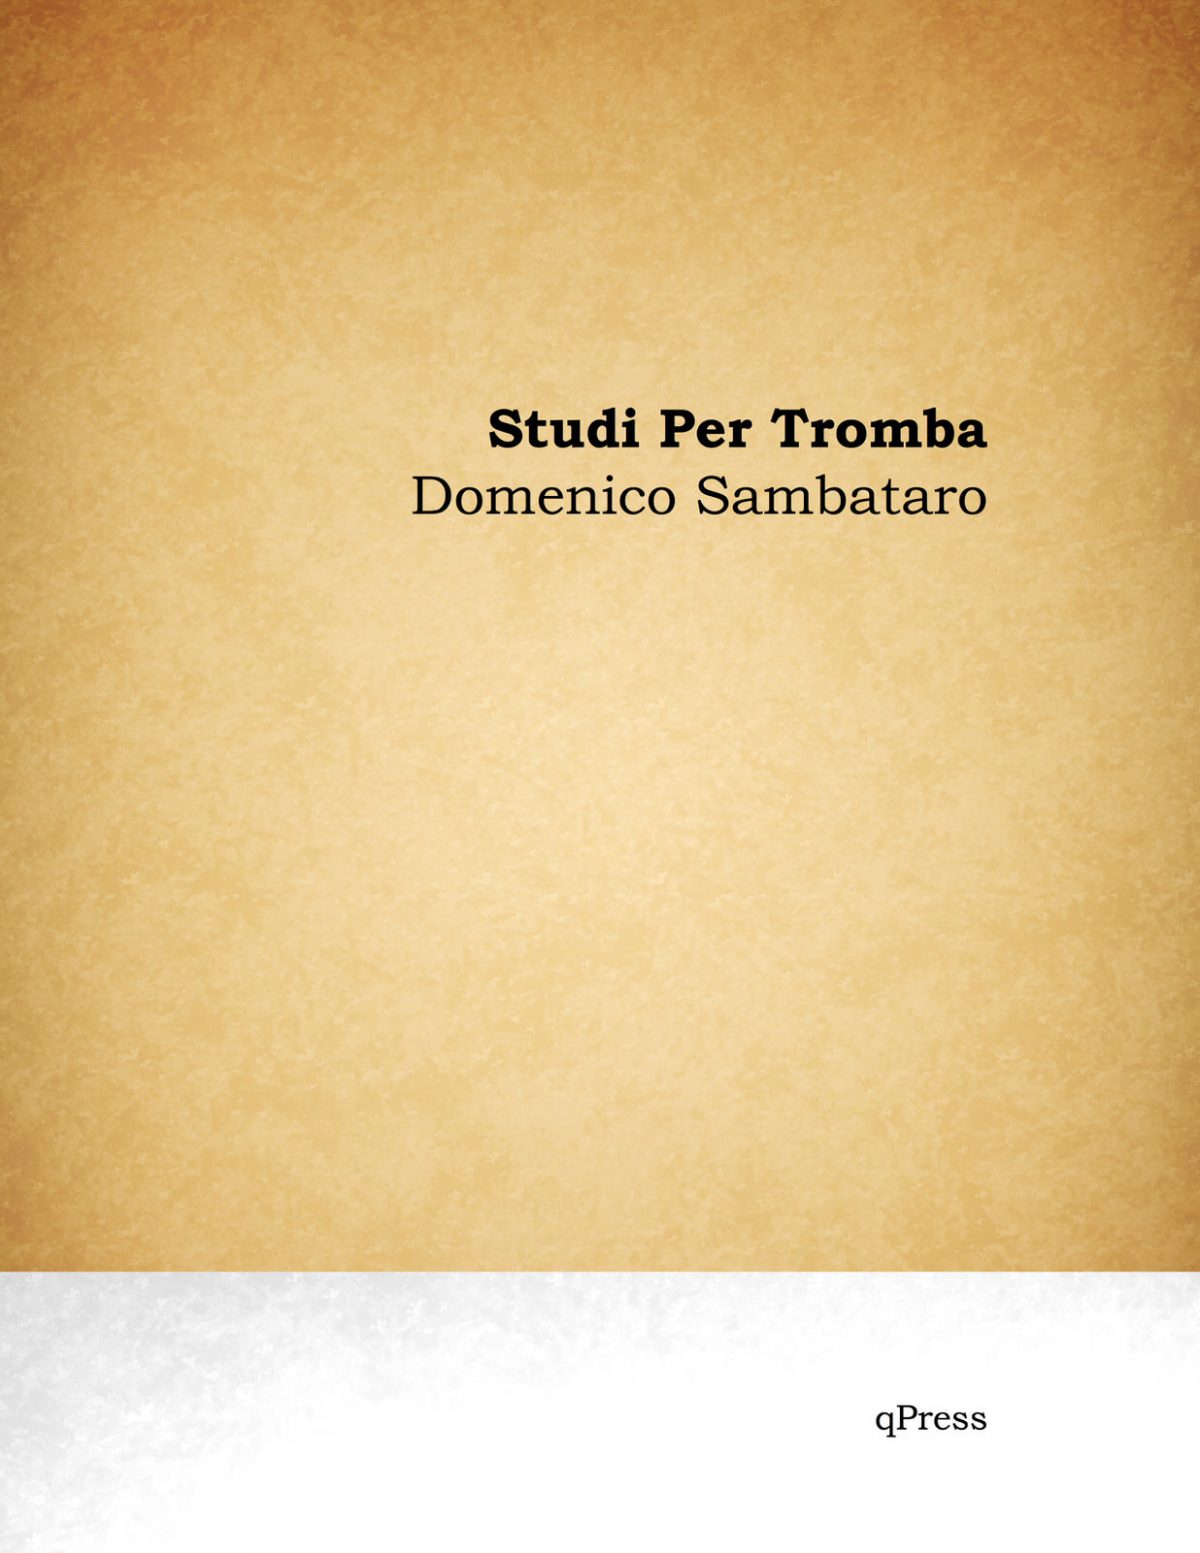 Sambataro, Domenico, Studi per tromba in Bb-p01